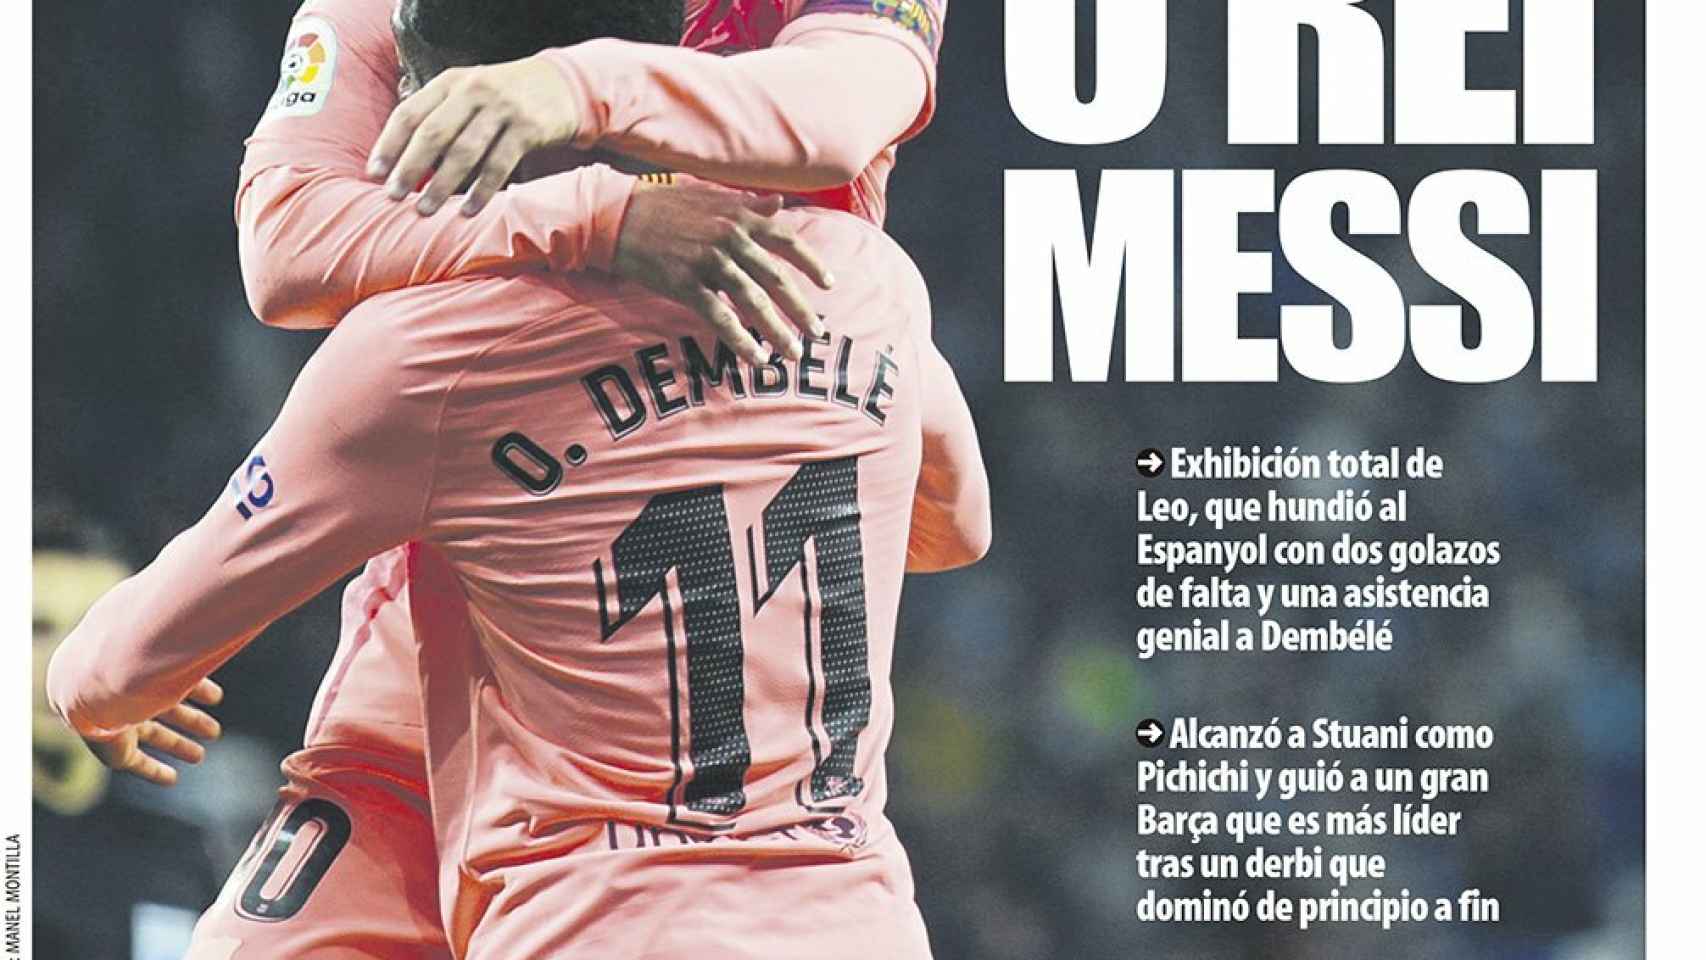 La portada del diario Mundo Deportivo (09/12/2018)1706 x 960